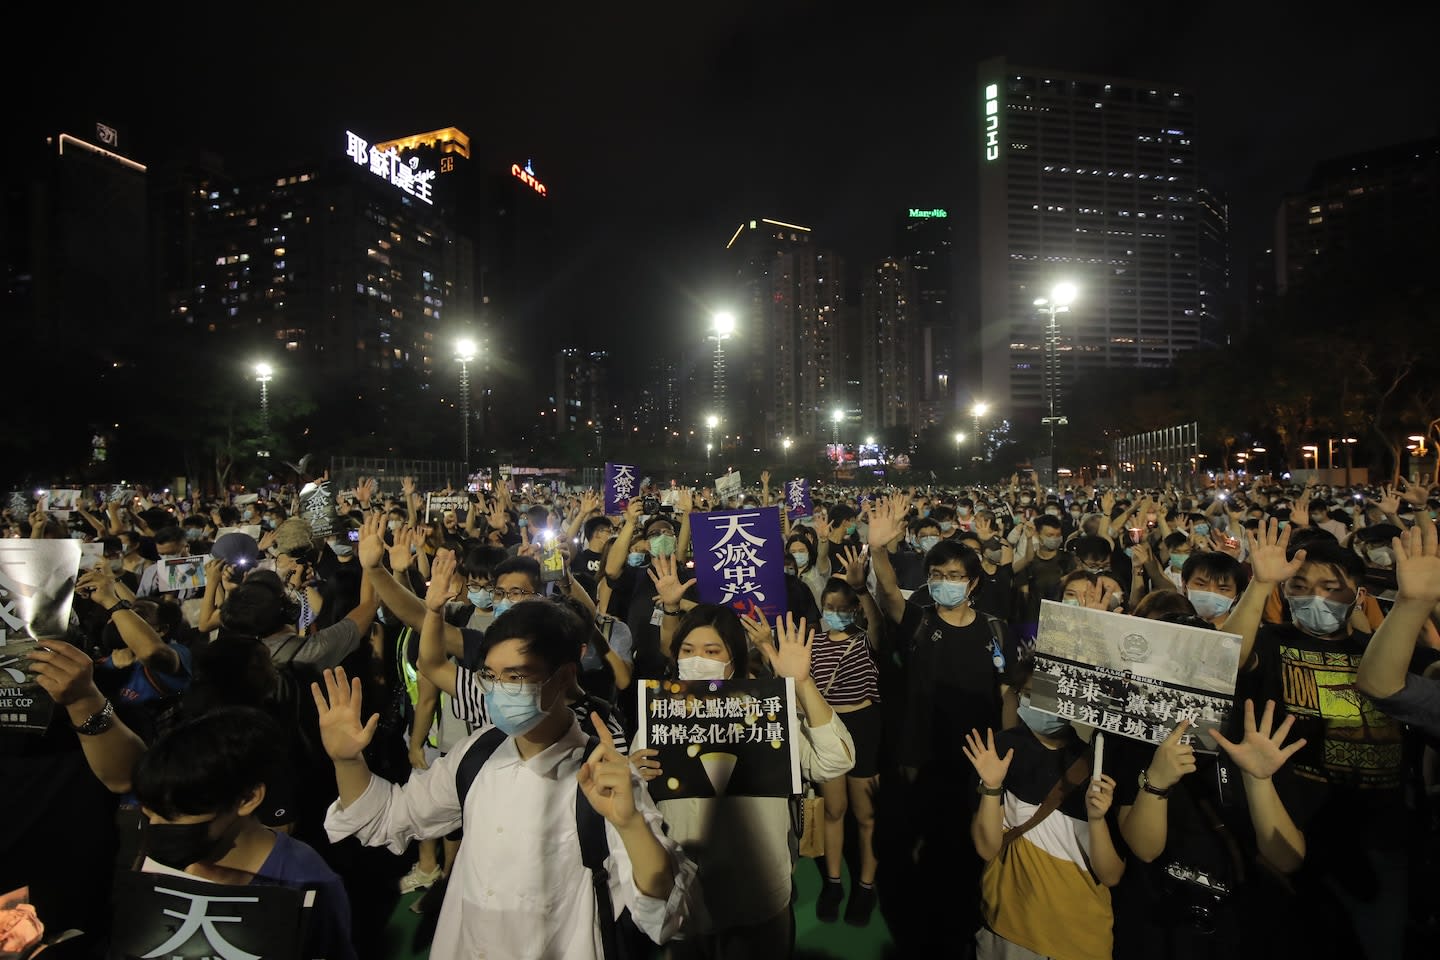 Hong Kong people defy ban on Tiananmen vigil to honor massacre victims